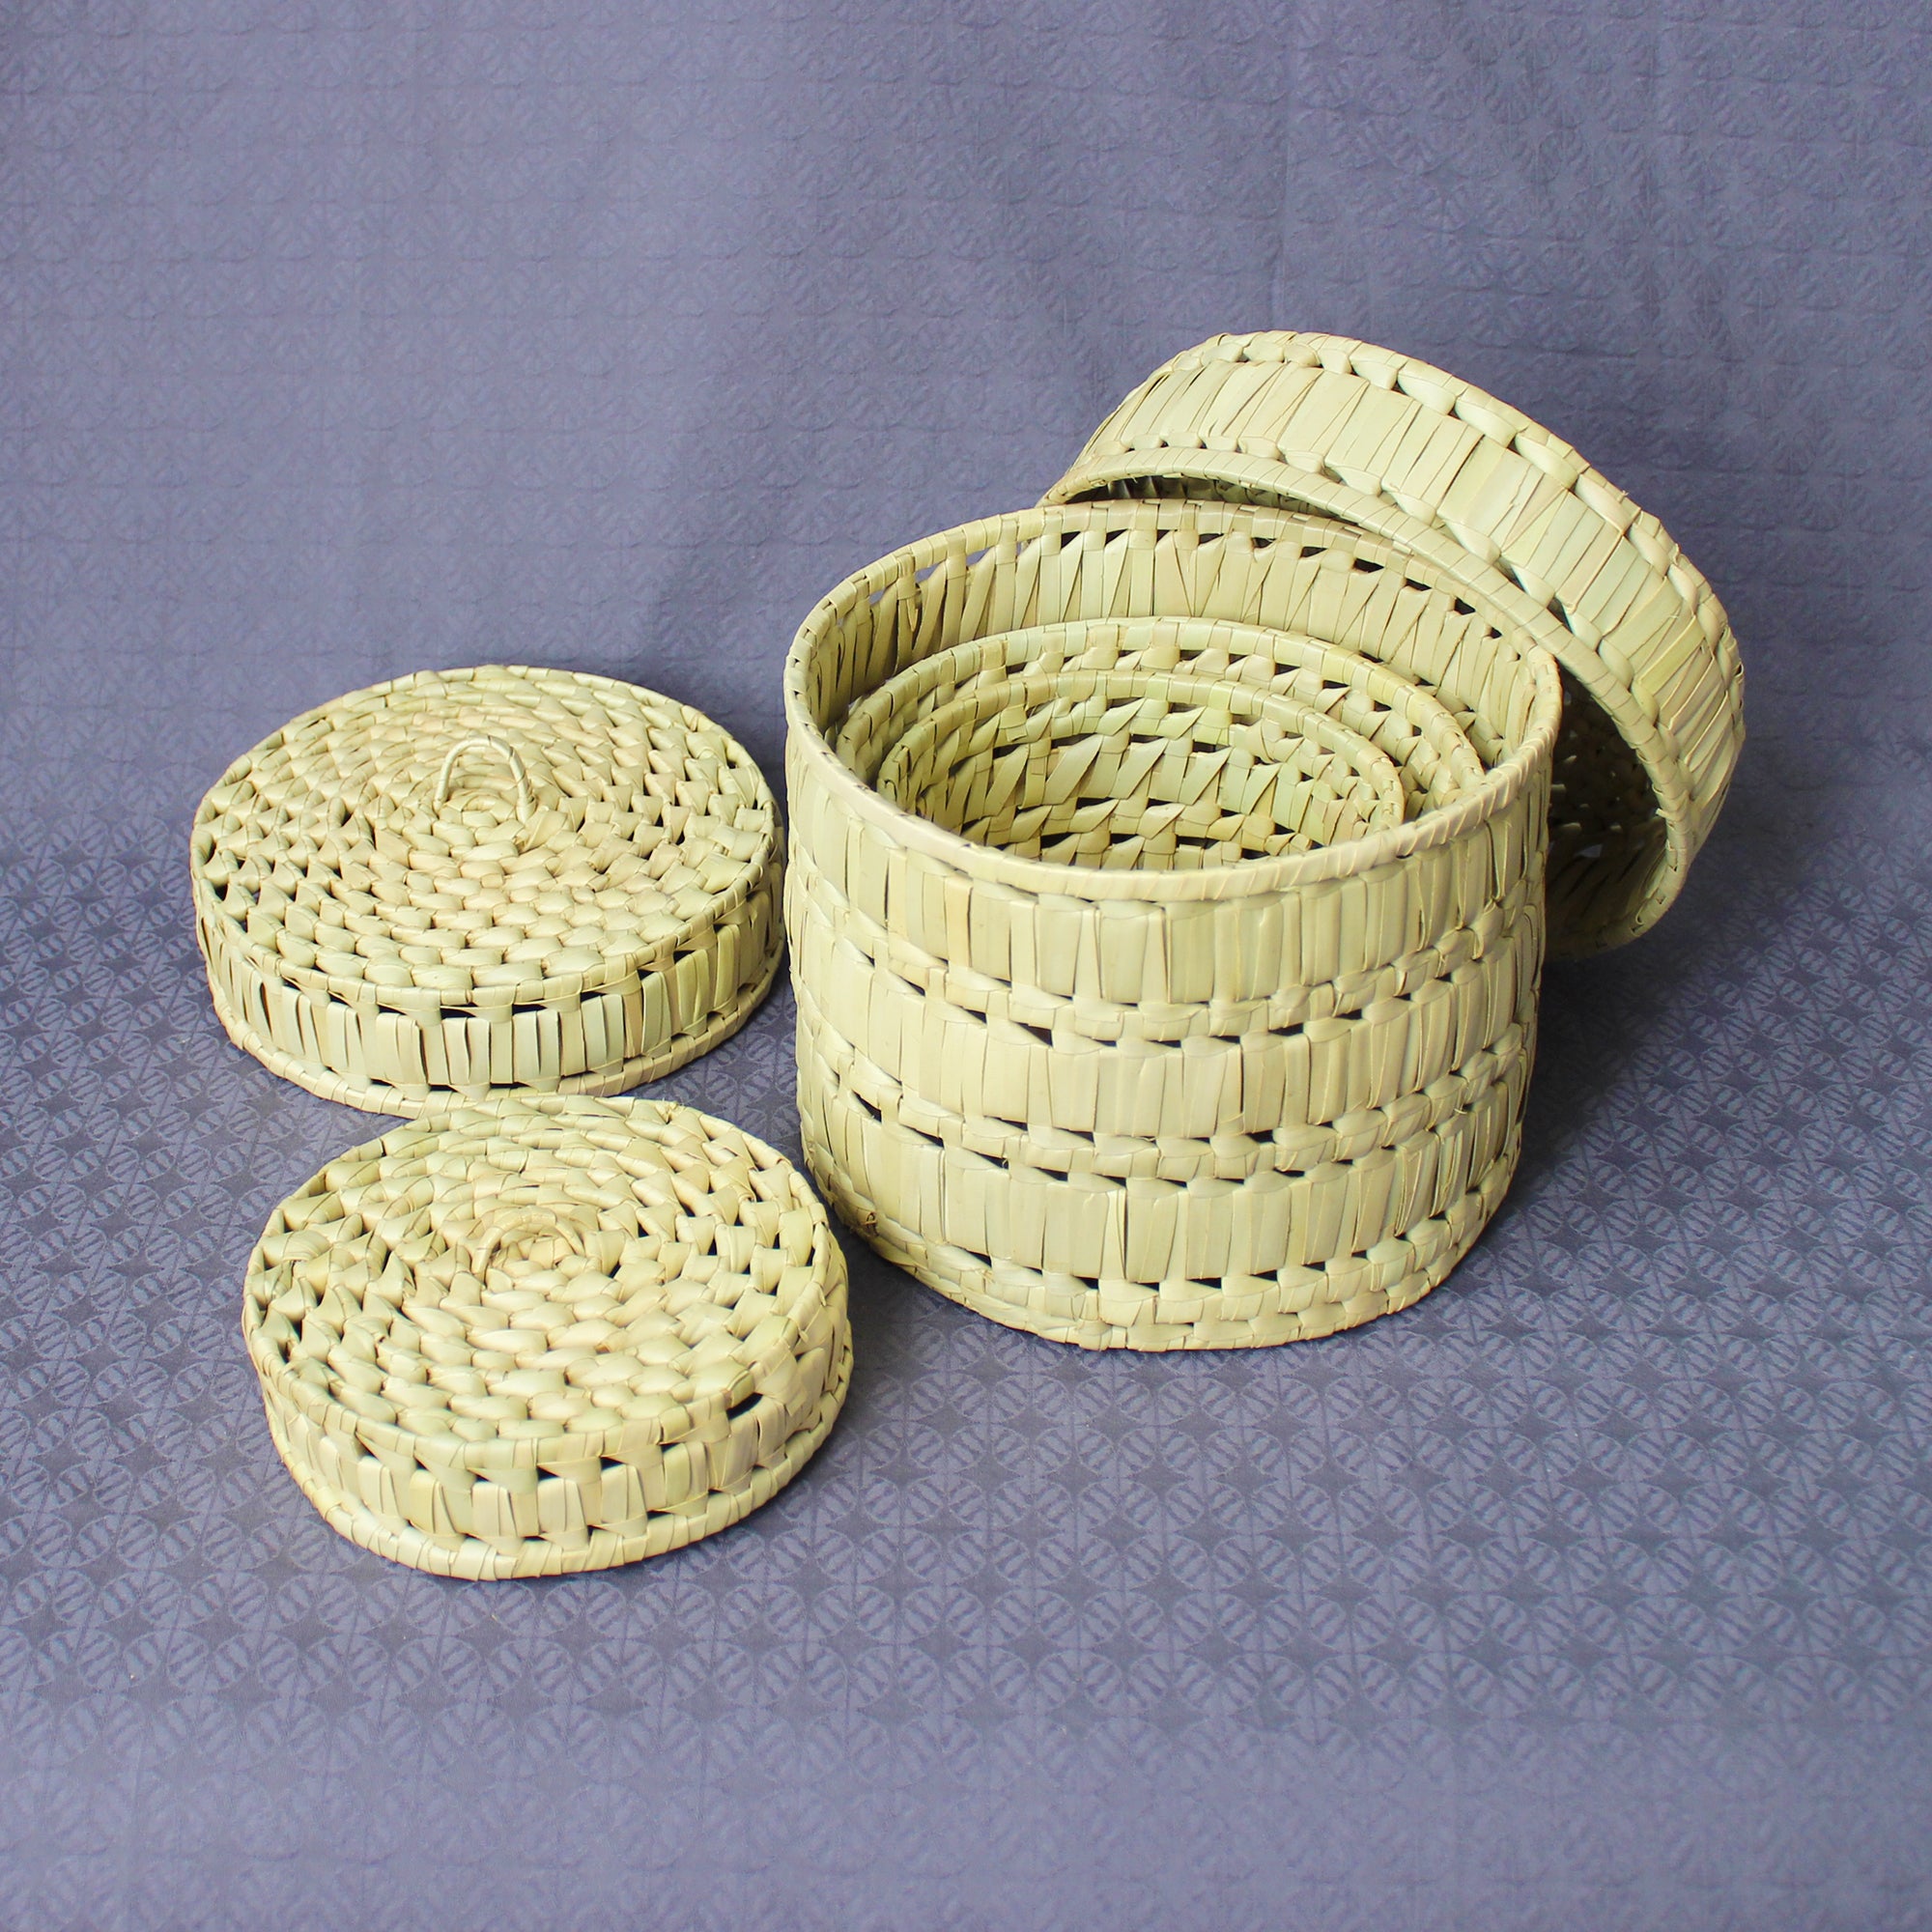 Reed storage baskets - 3 sizes